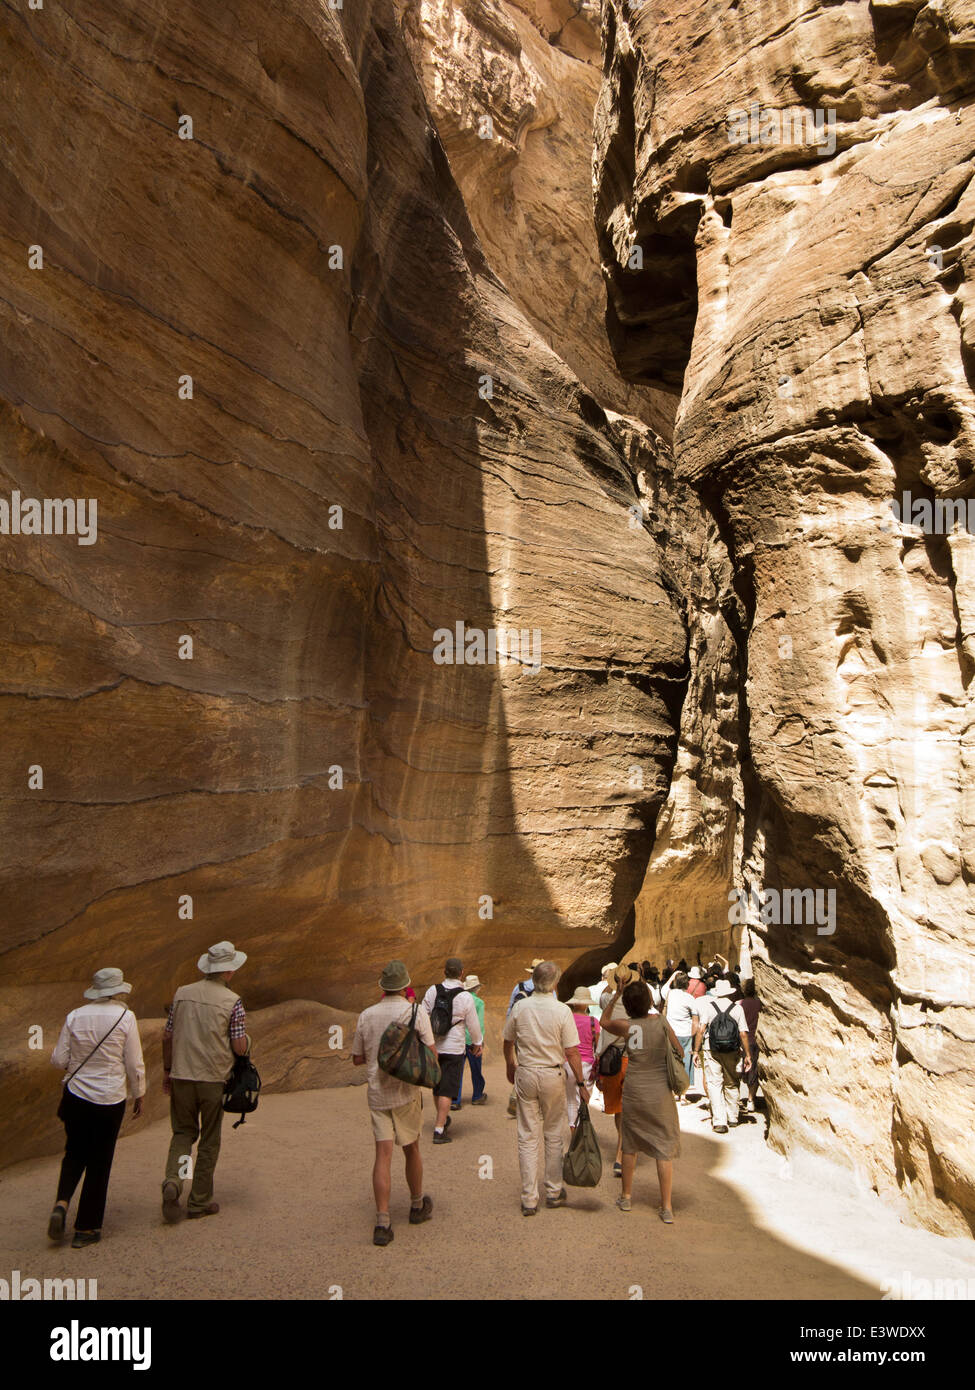 Jordan, Arabah, Petra, tourists walking through Al-Siq entrance canyon to site Stock Photo